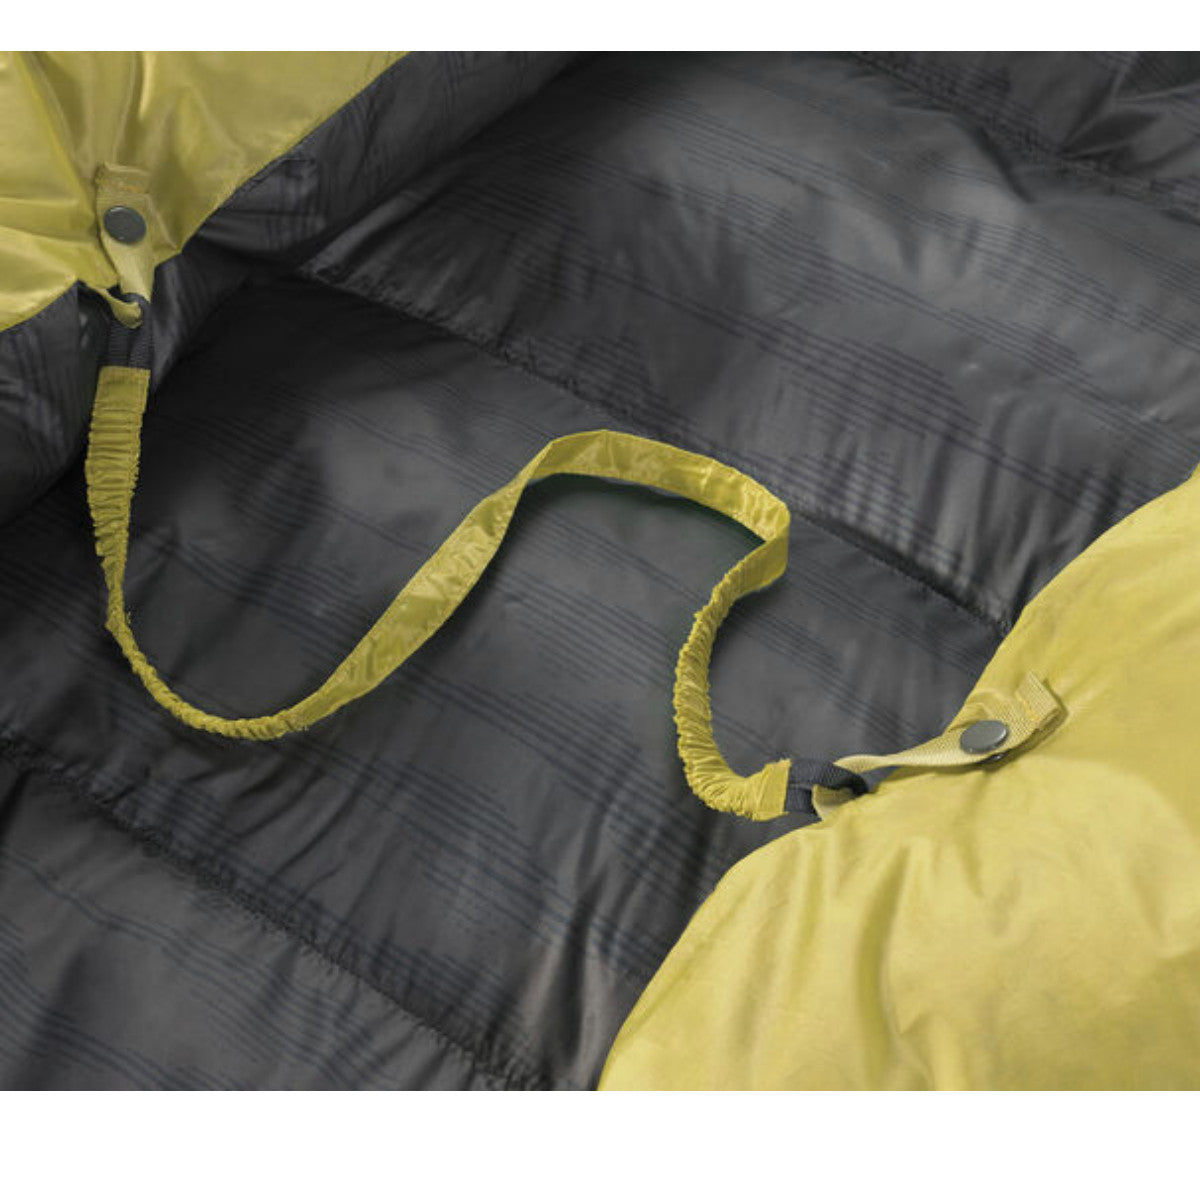 Thermarest Corus 20F/-6C Quilt in golden colour showing mattress strap attachment